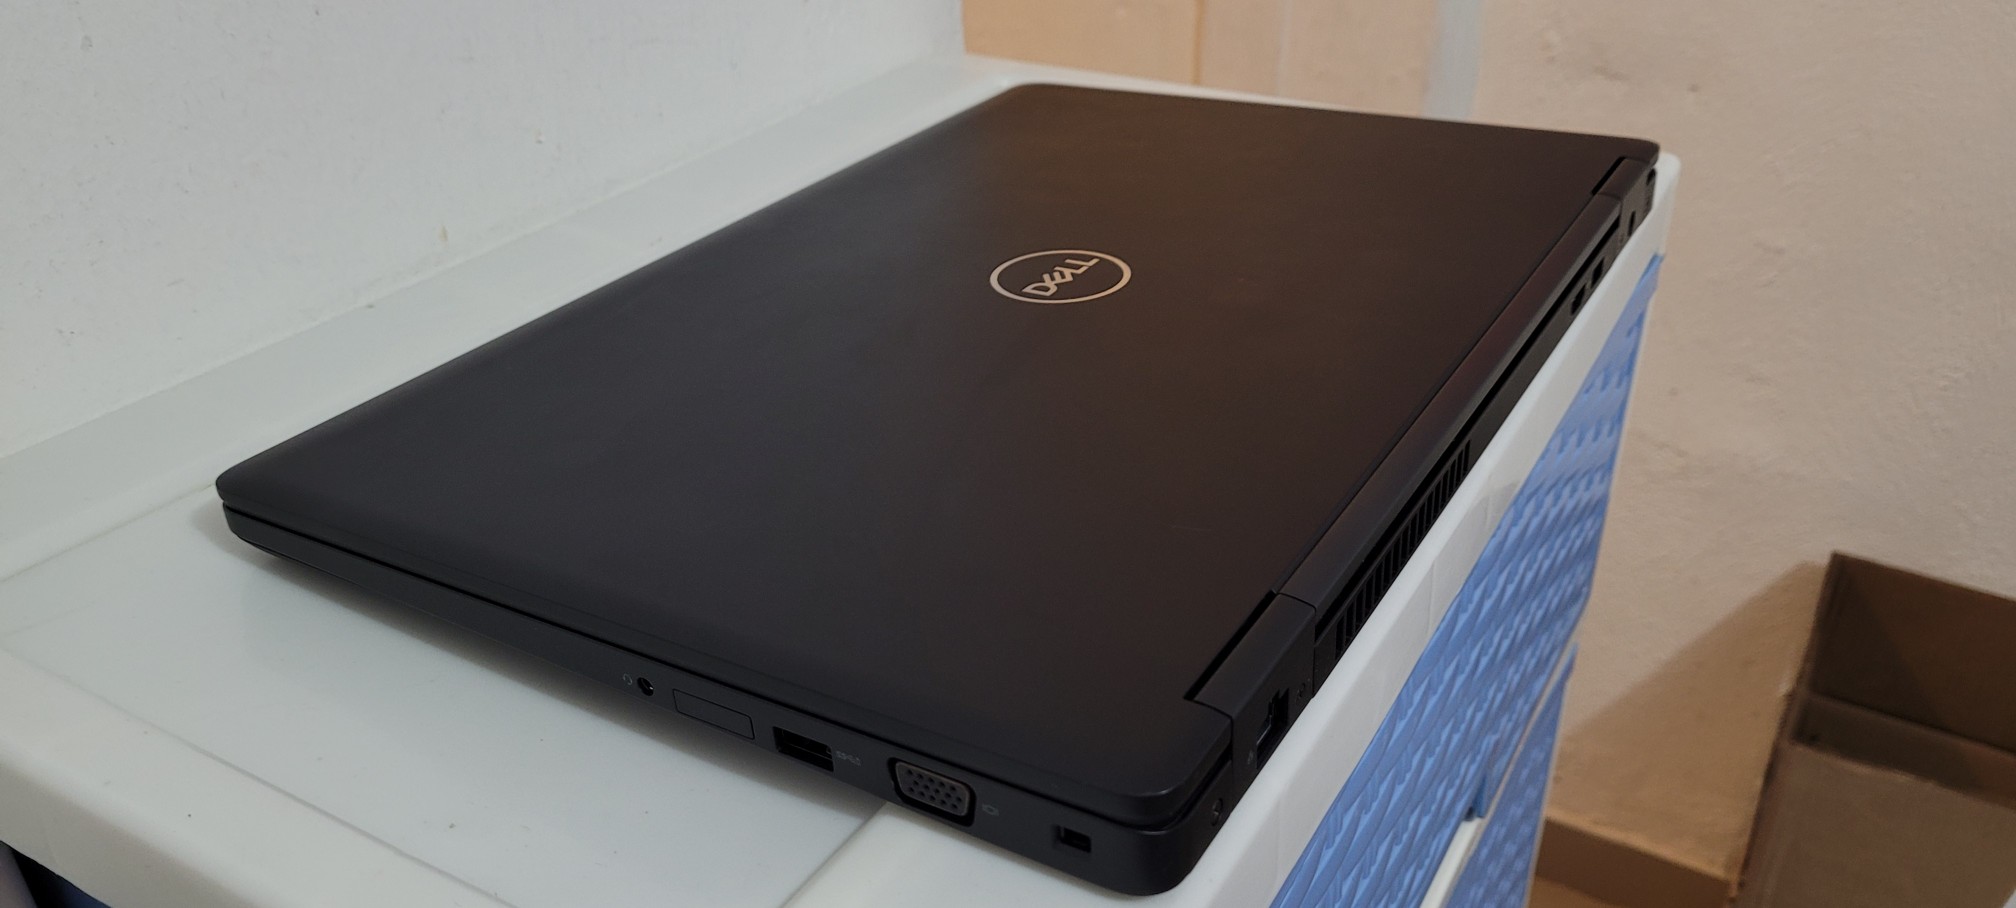 computadoras y laptops - Dell Slim 7470 14 Pulg Core i7 6ta Ram 8gb Disco 256gb SSD 1080p 2